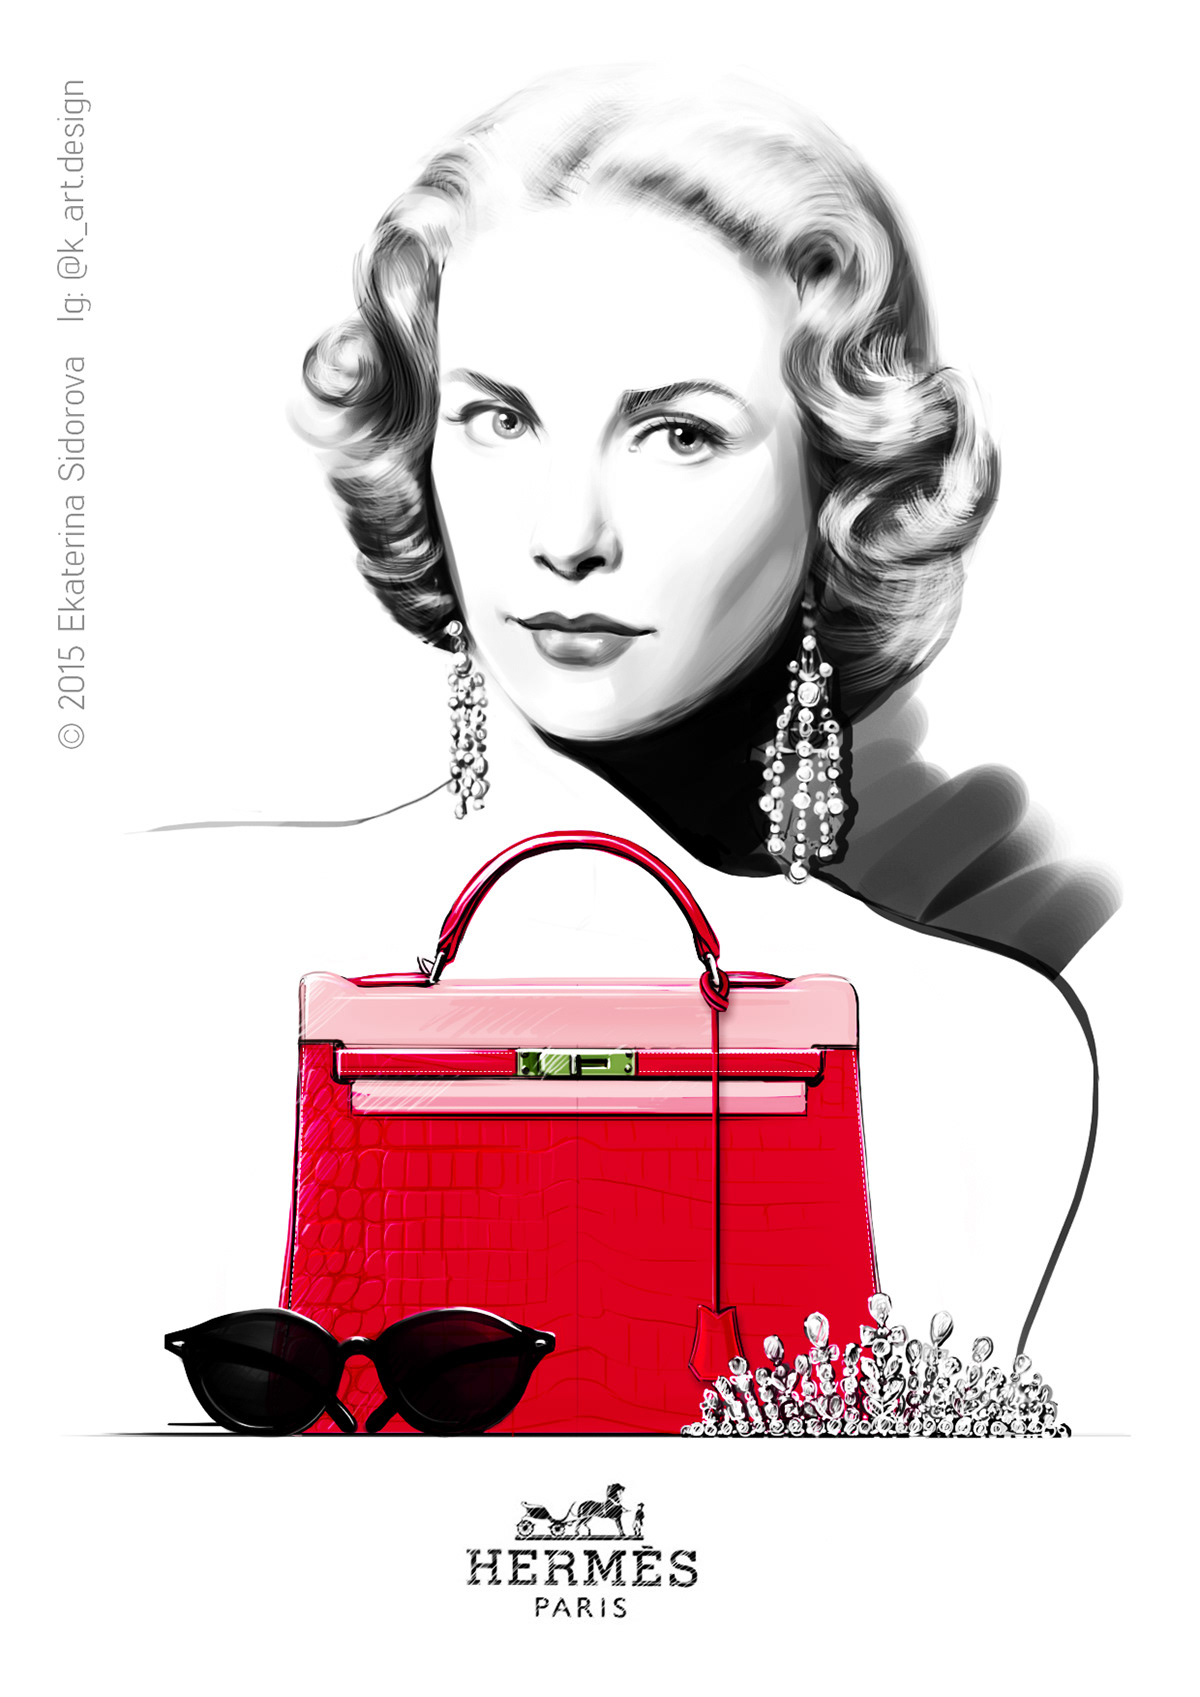 bags kelly hermes fashionillustration Princess Monaco grace